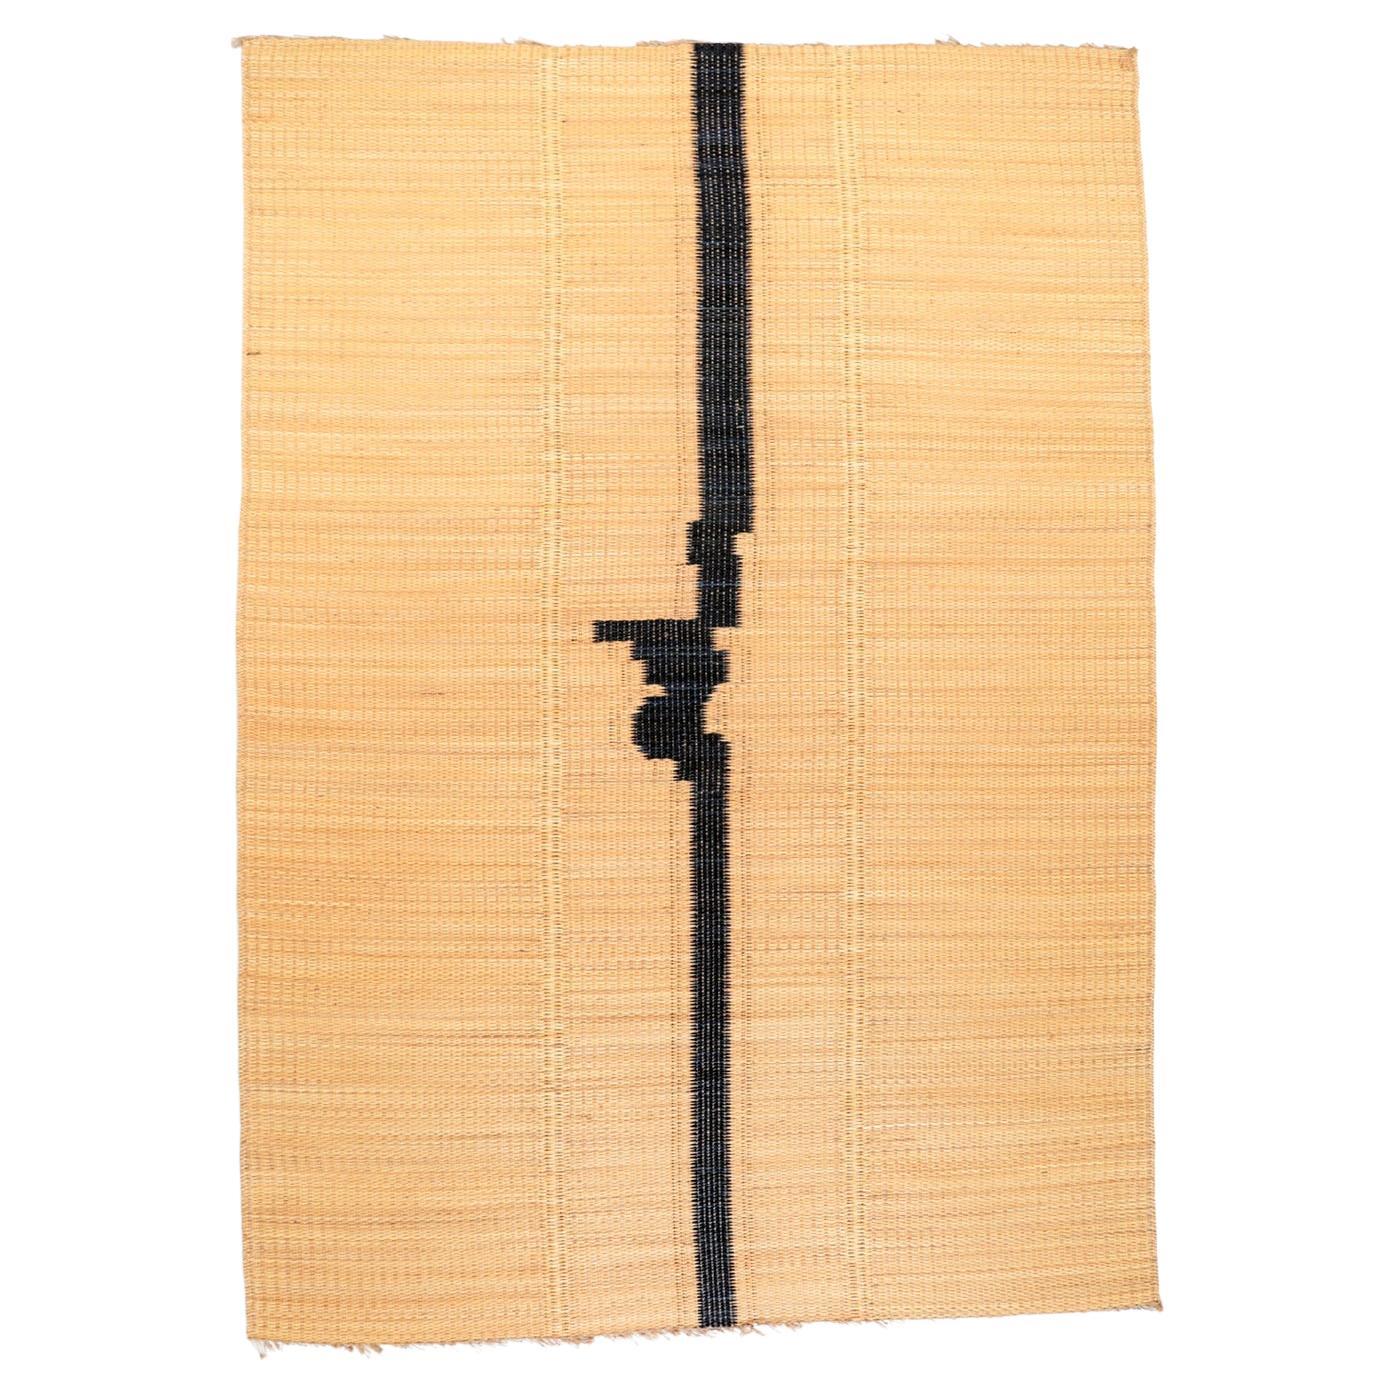 Handmade Rug in Natural Fiber with Striped Oriental Design La Fibre Artisanale For Sale